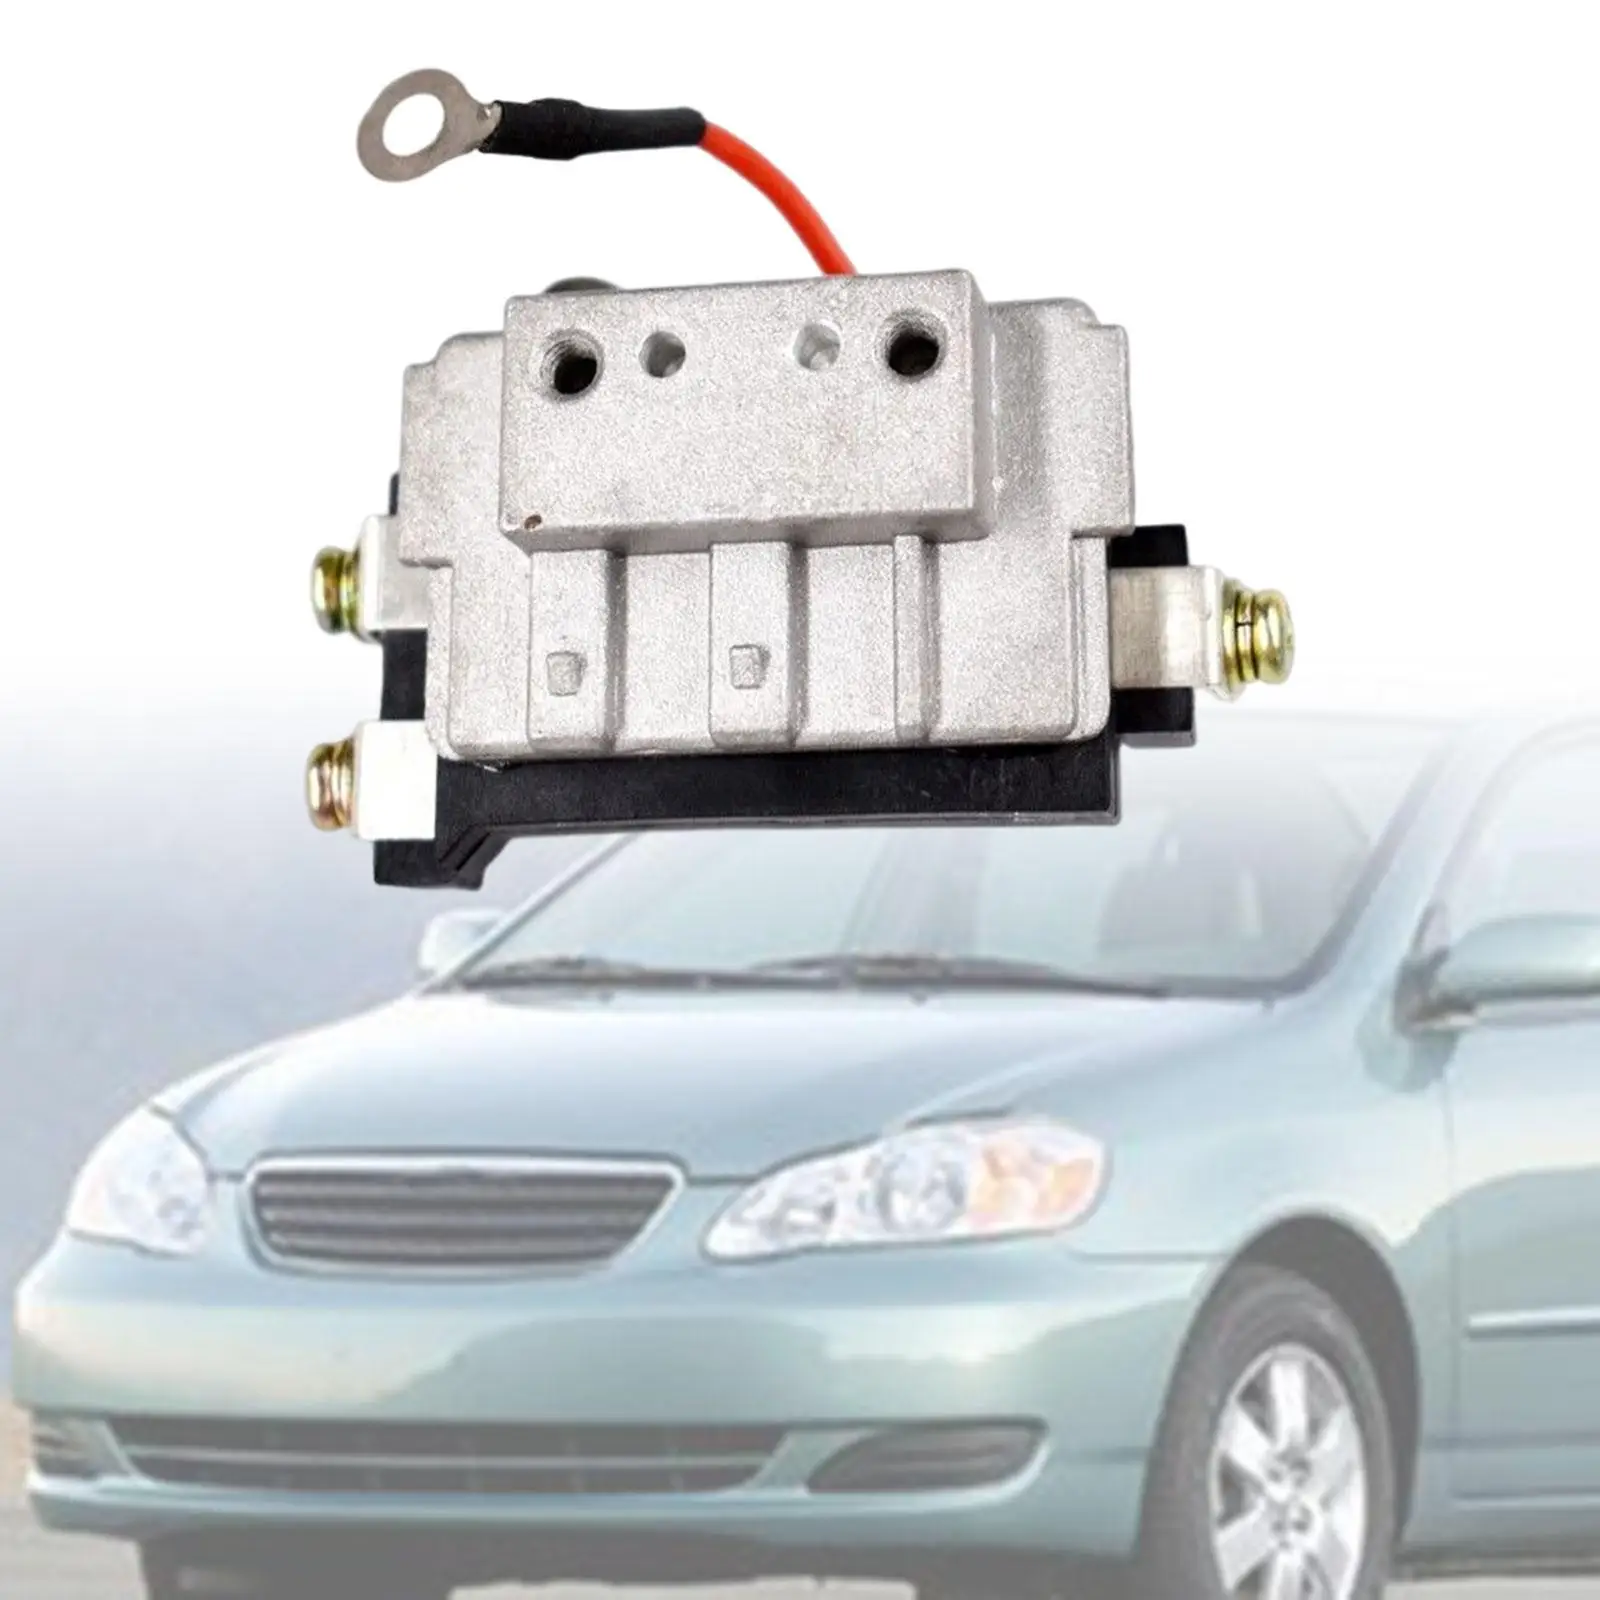 Ignition Control Module Auto Motor Accessory Durable for Toyota Corolla